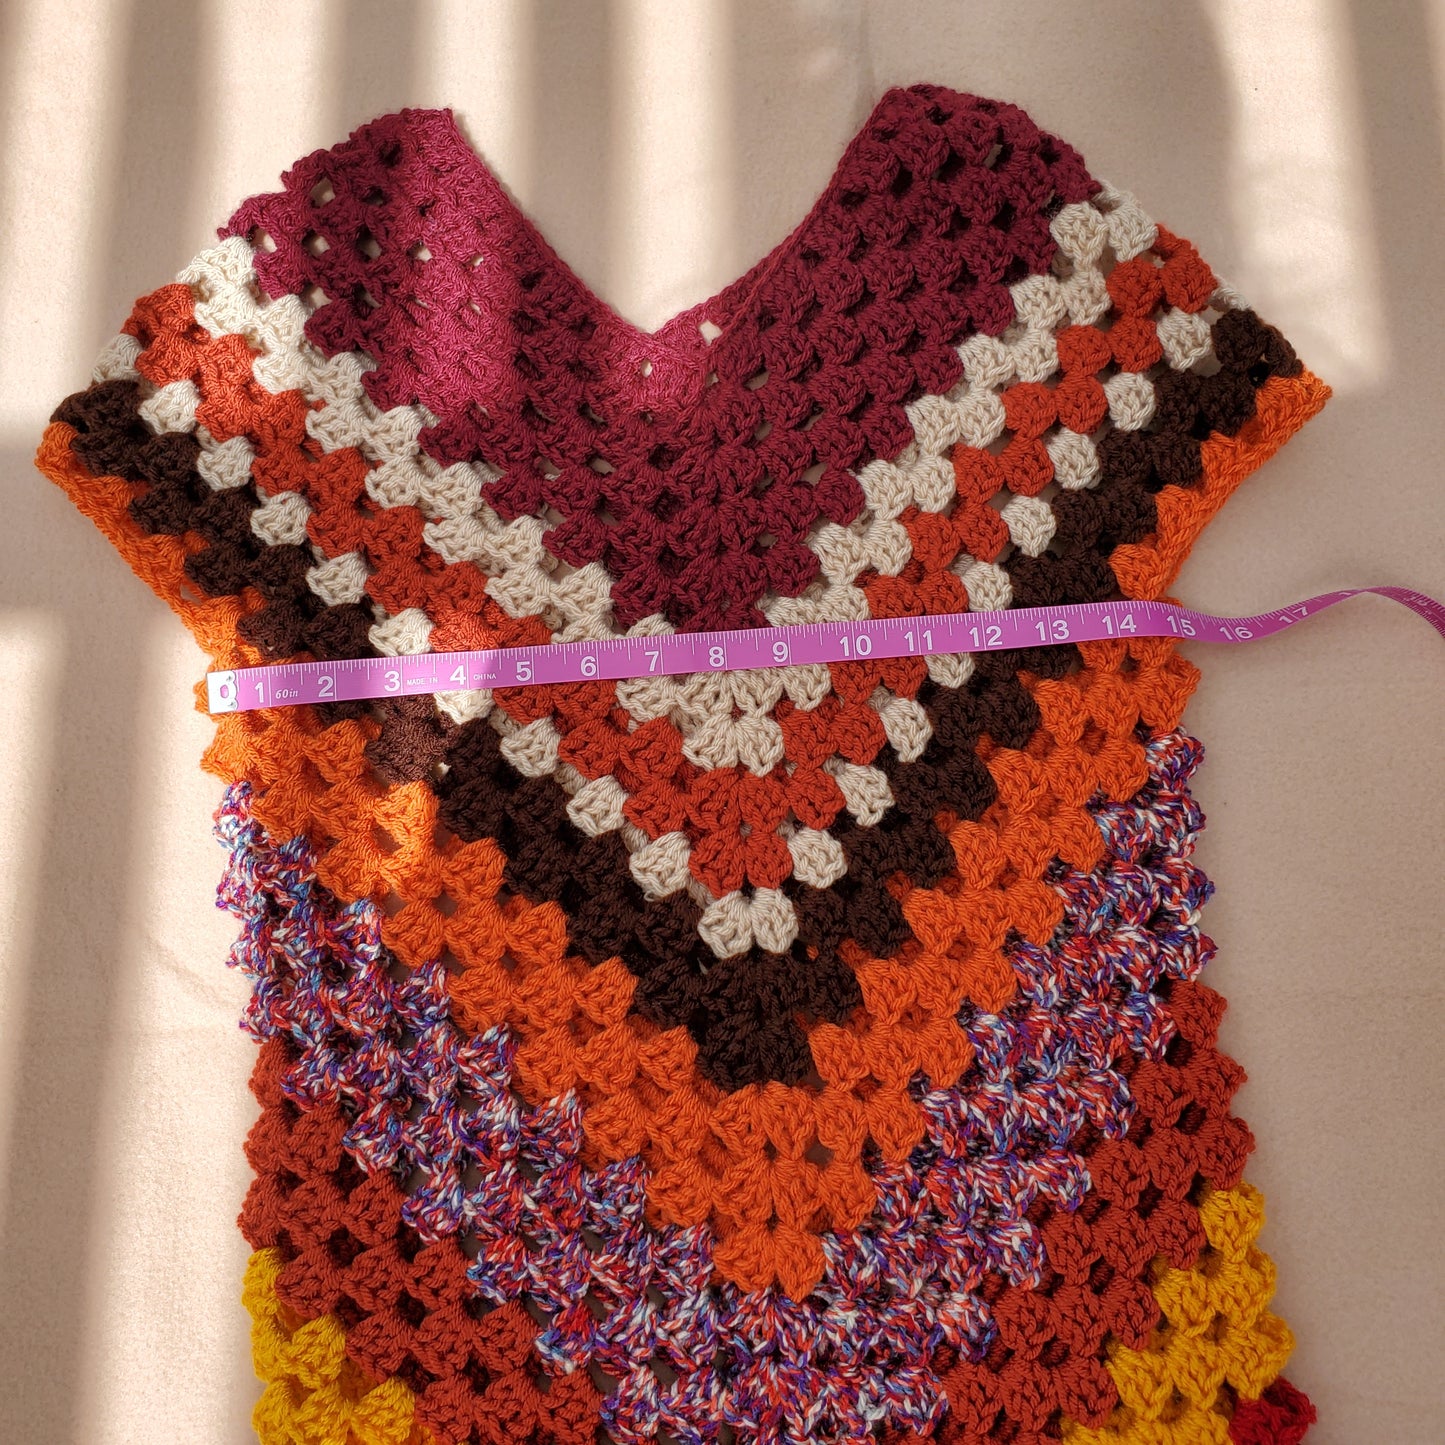 Poncho Dress - Crochet Granny Stitch